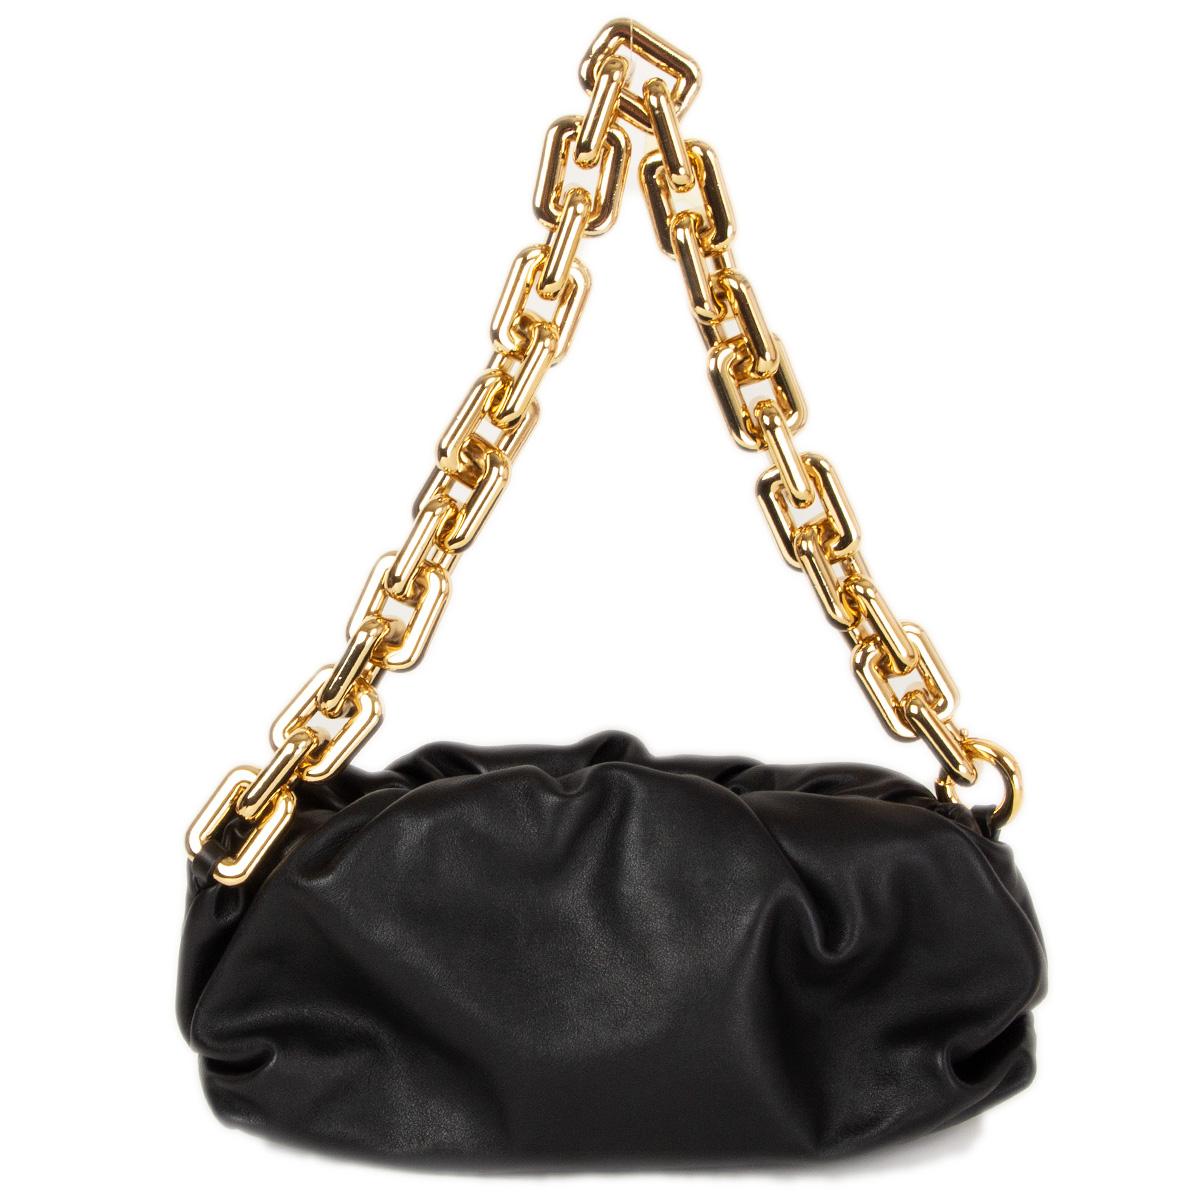 black leather chain bag